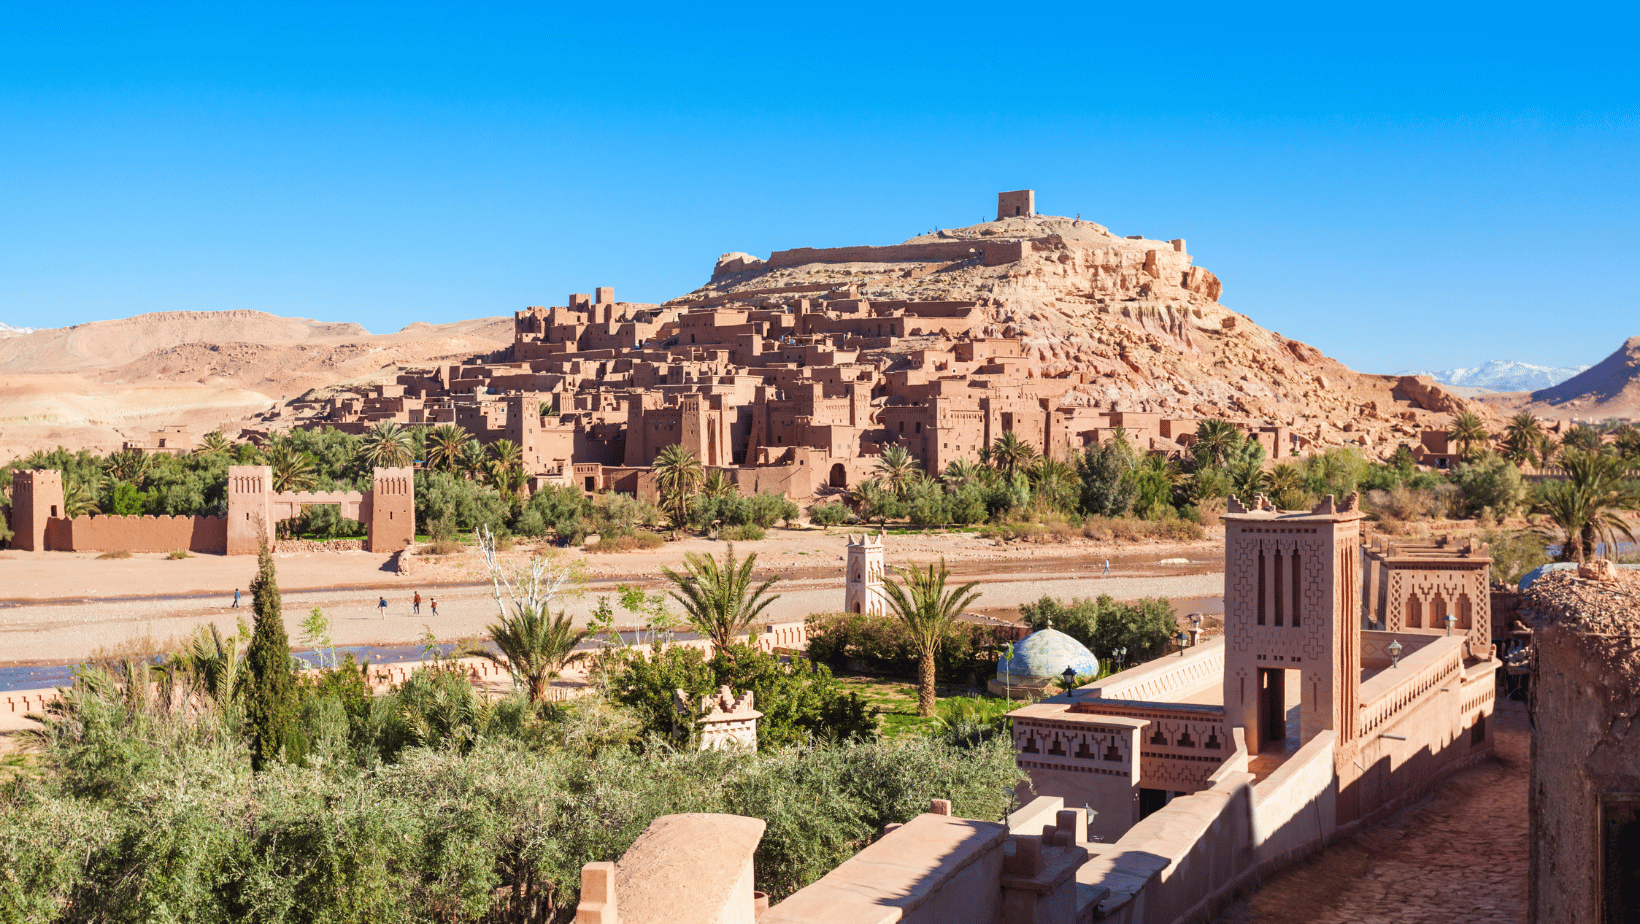 2-Day Desert Tour From Marrakech to Zagora